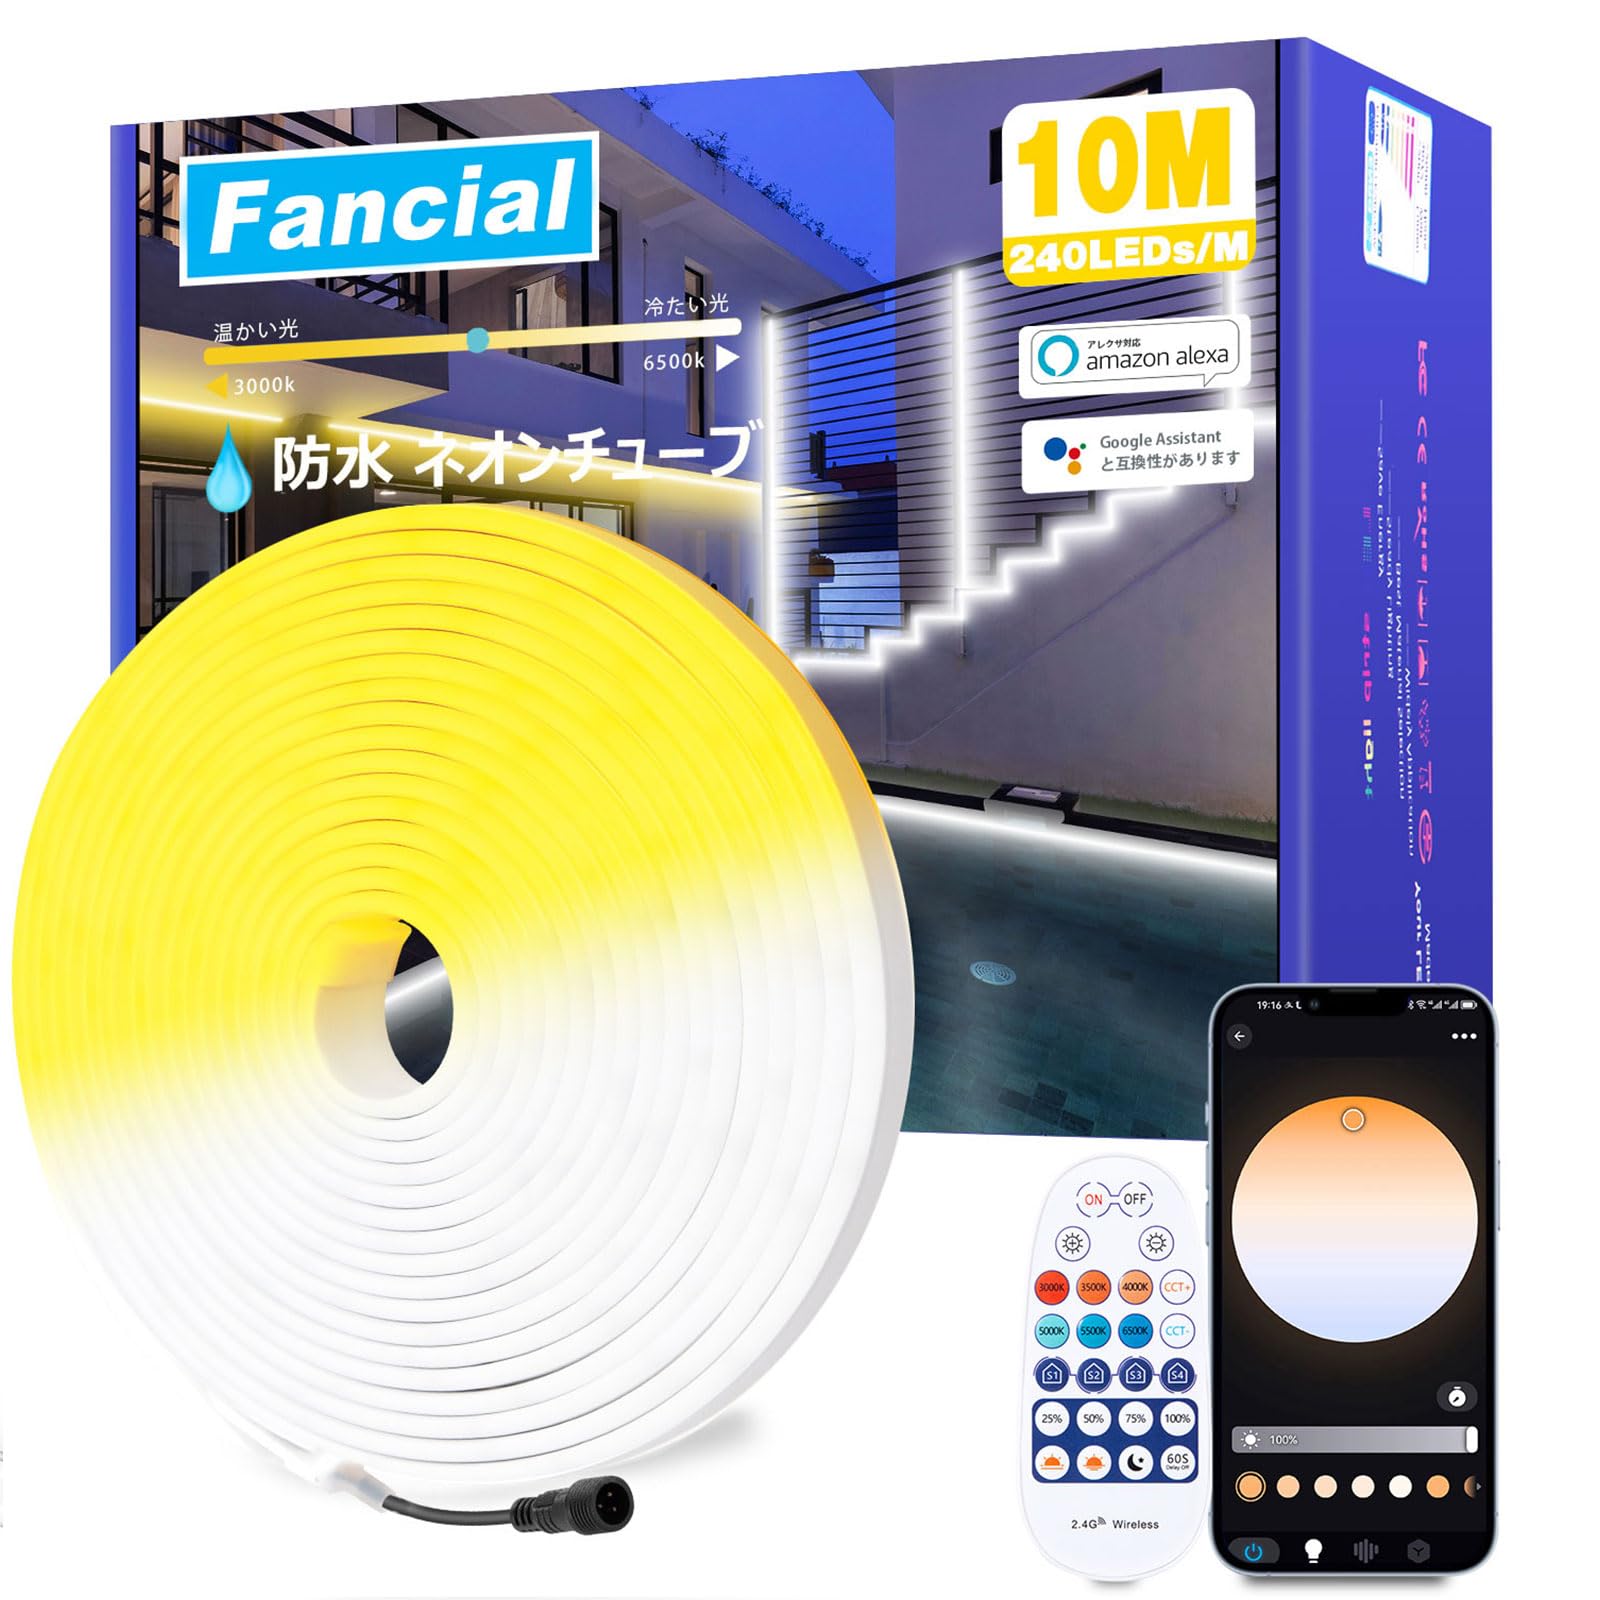 Fancial 10m Ledチューブライト アレクサ対応 高輝度 調光可能 ホワイトライト 3000K-6500K 24V Ledテープライト 防水 外照明 部屋 寝室 キッチン 庭園の装飾 (白, 10M)